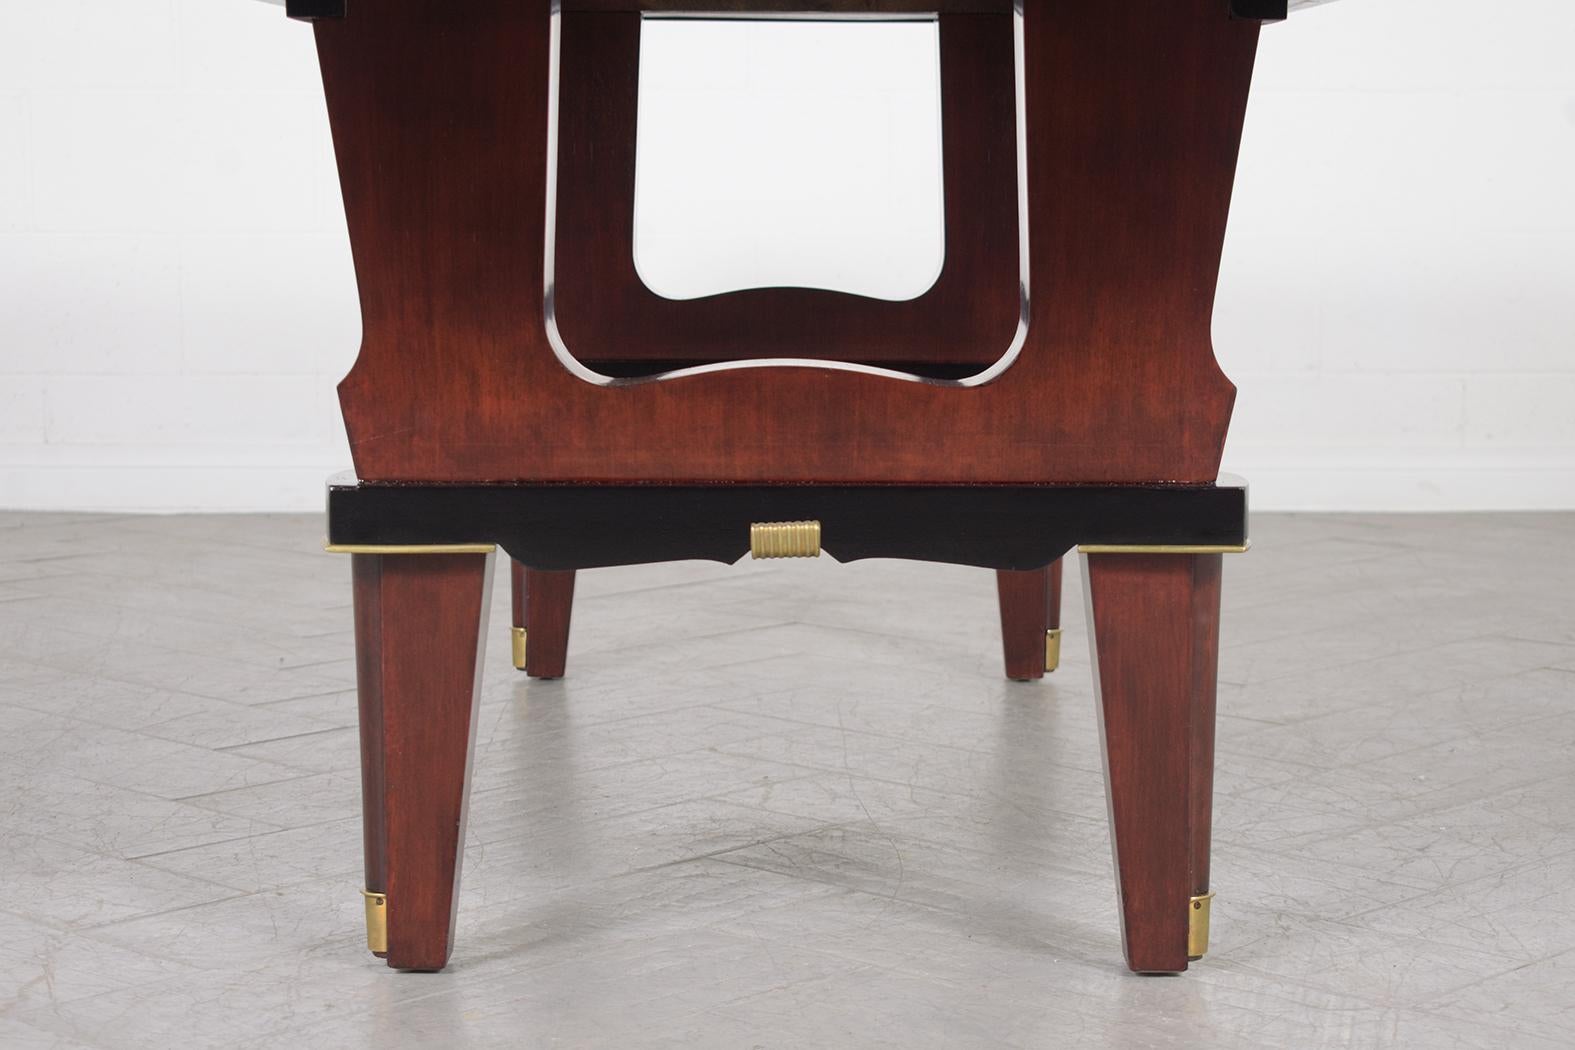 1960s French Executive Desk: Art Deco Mahogany Design with Ebonized Accents 2